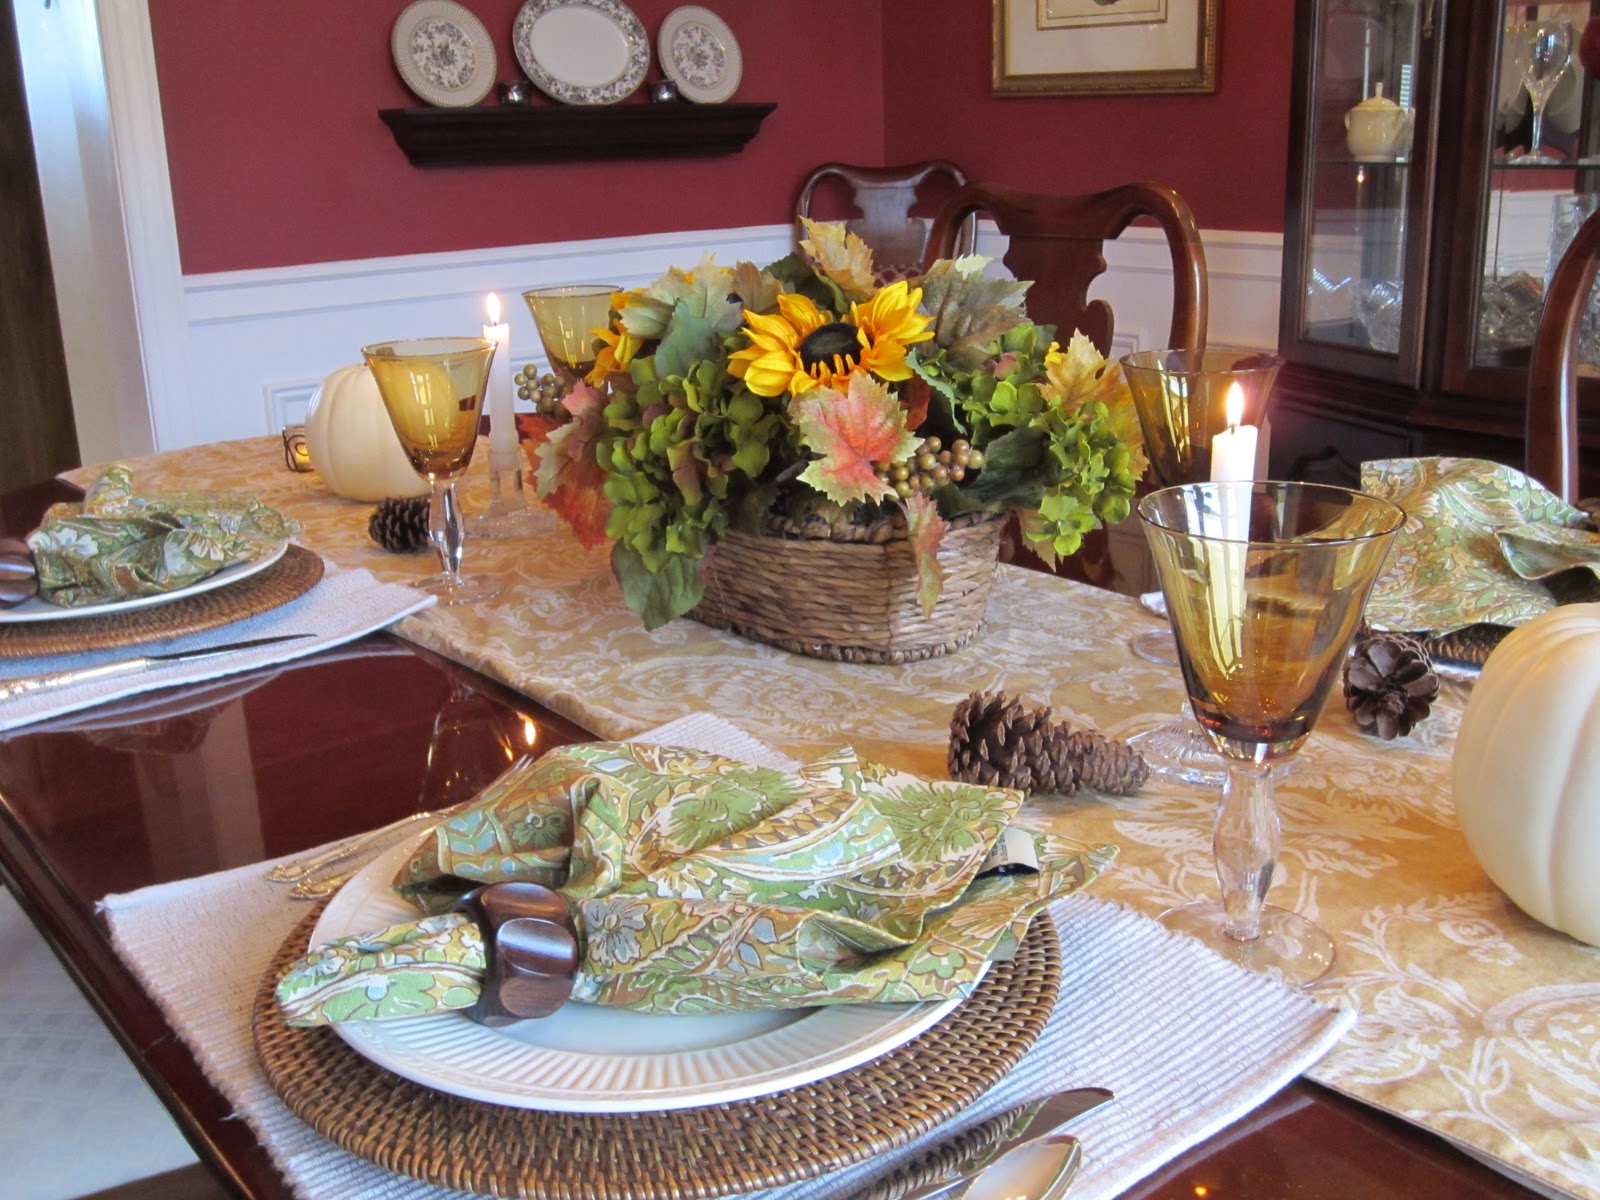 Thanksgiving Table Setting 